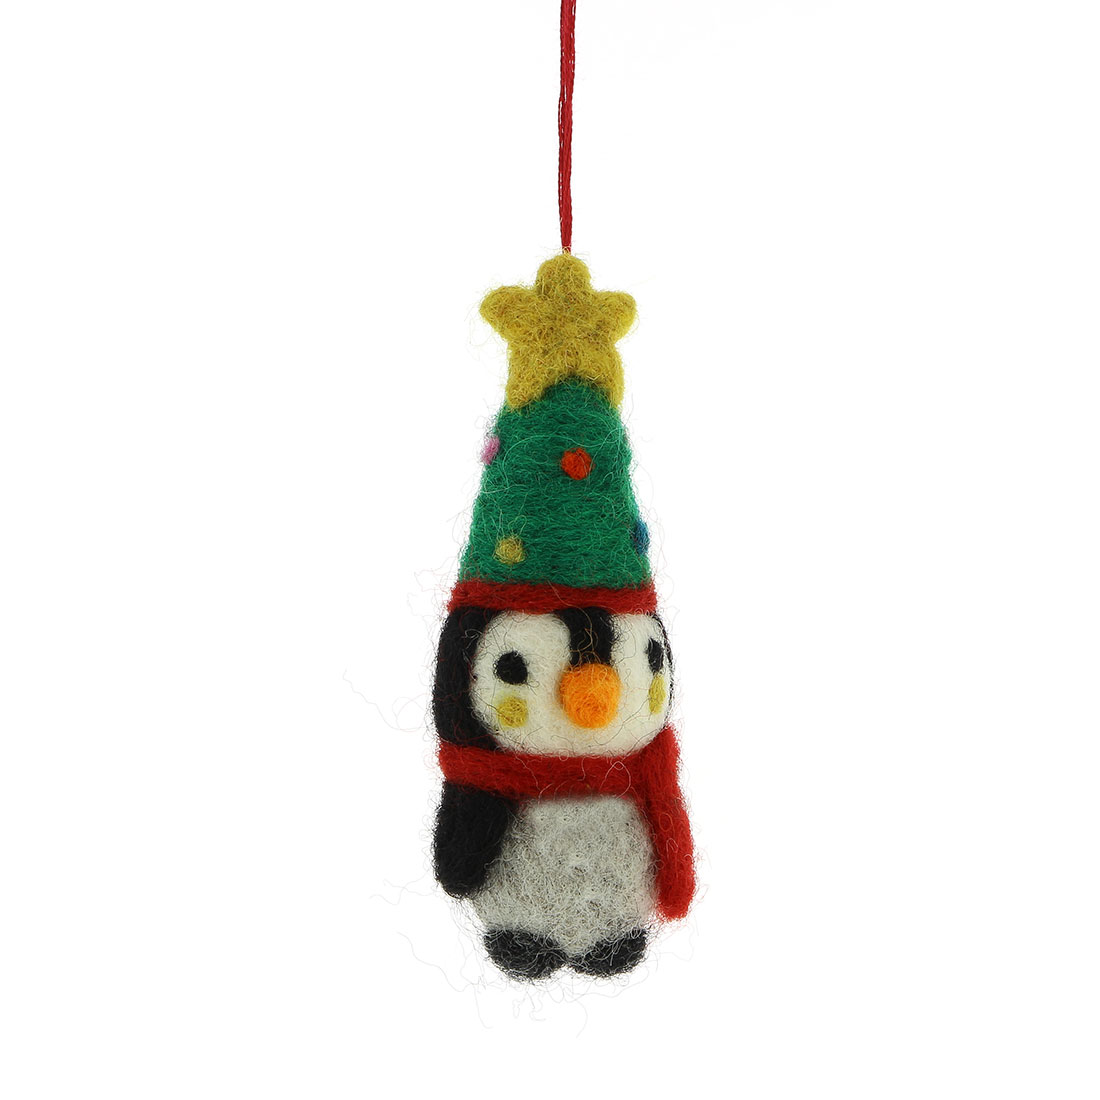 Kersthanger Pinguïn met kerstboom